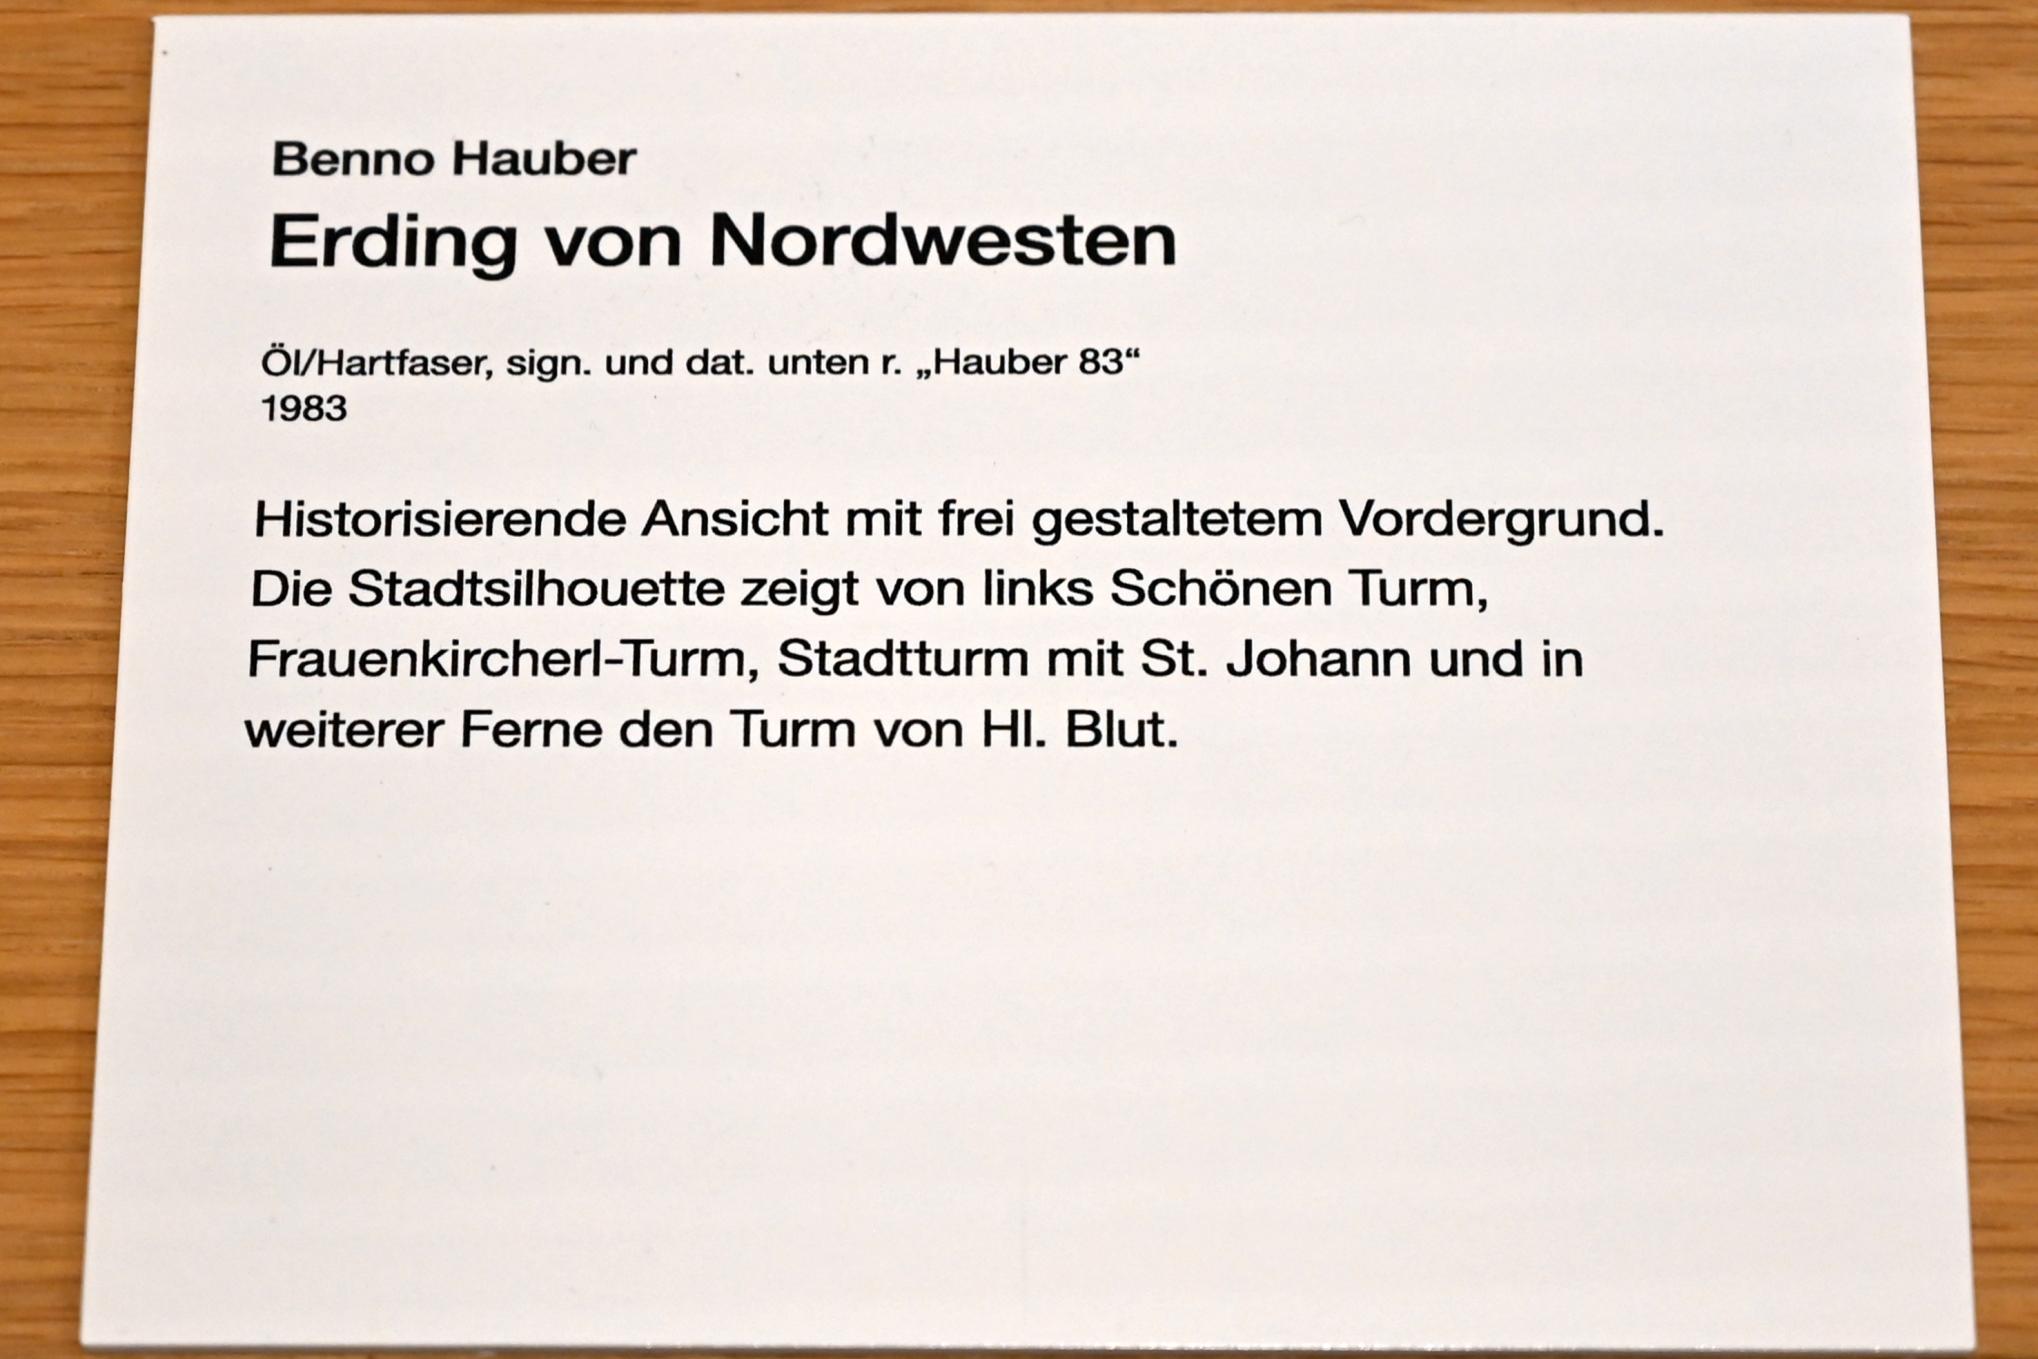 Benno Hauber (1983–1993), Erding von Nordwesten, Erding, Museum Erding, Erdinger Künstler, 1983, Bild 2/2